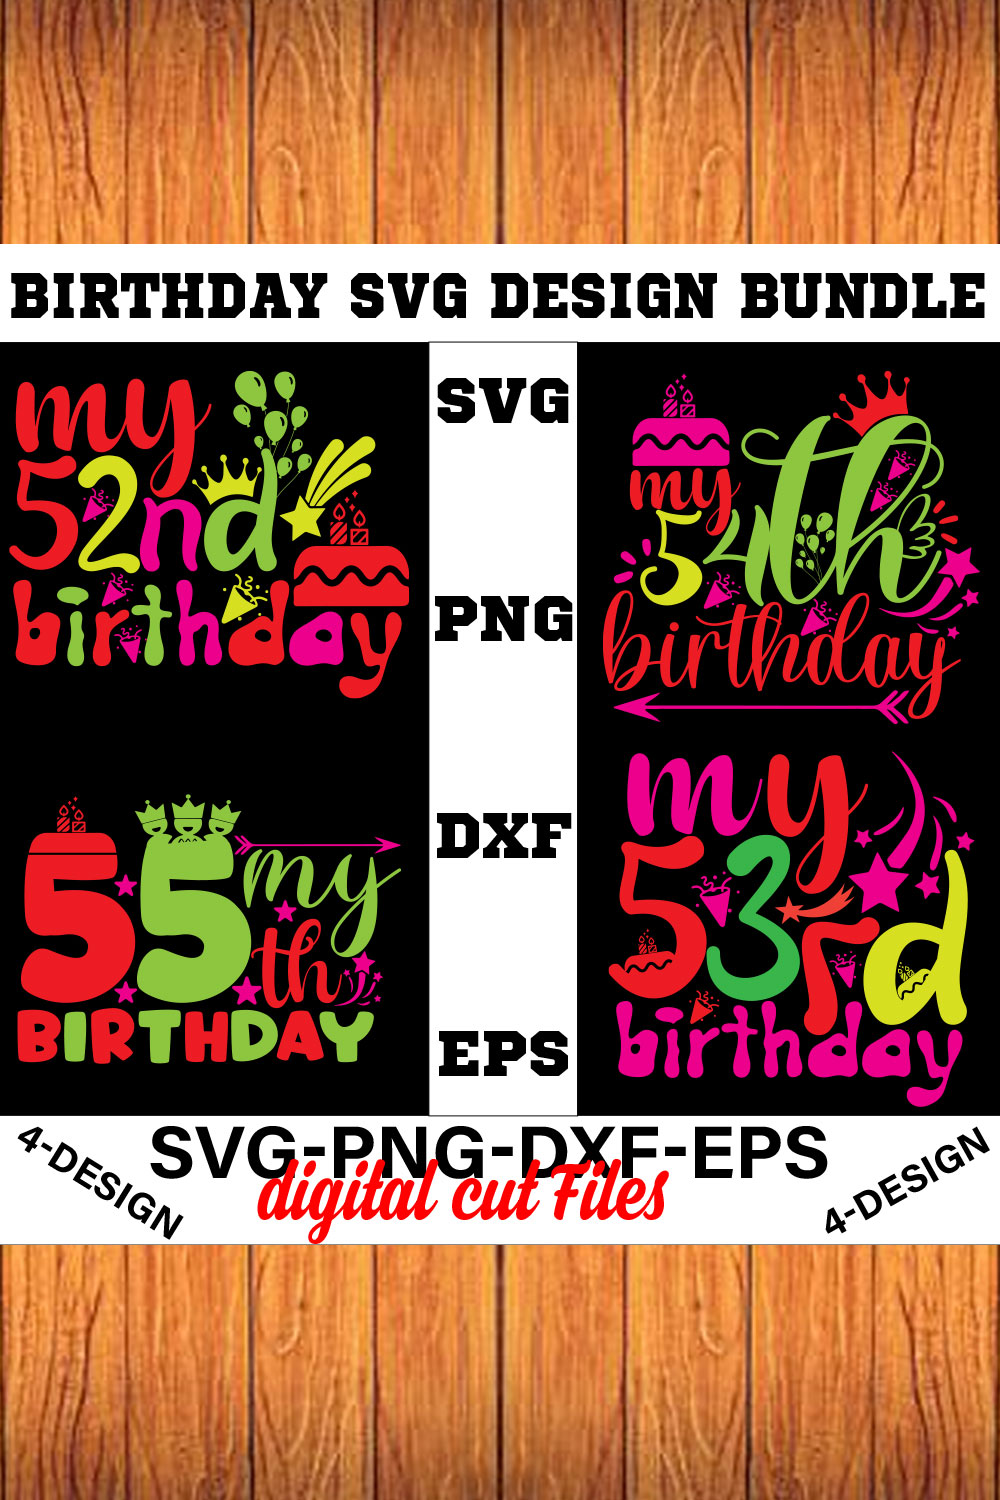 birthday svg design bundle Happy birthday svg bundle hand lettered birthday svg birthday party svg Volume-14 pinterest preview image.